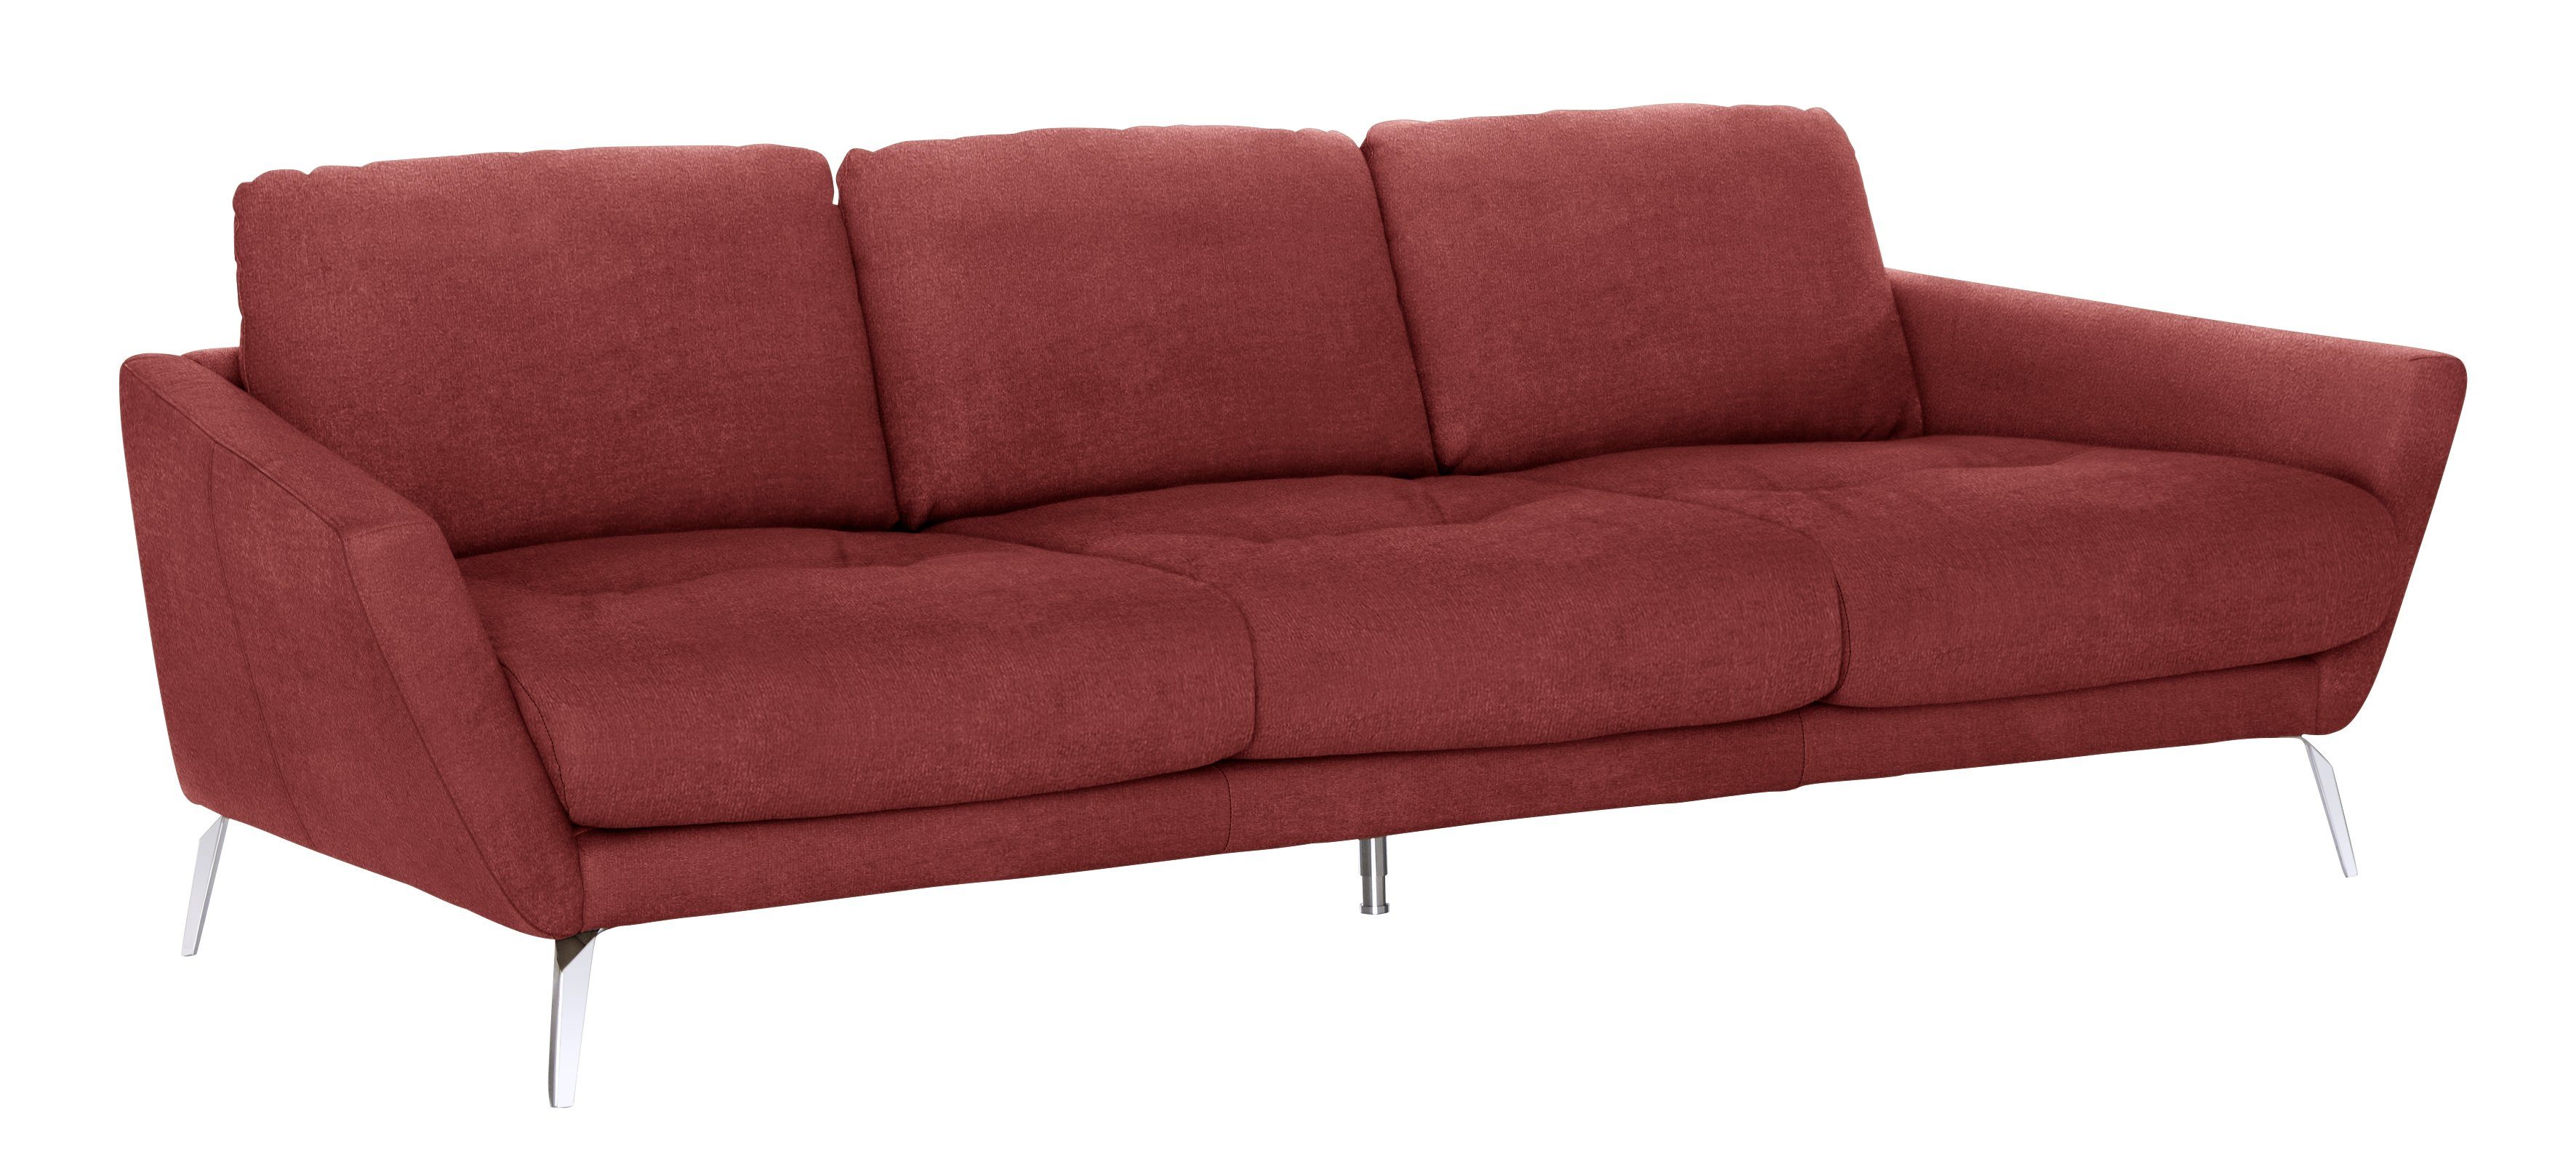 im Sitz, Chrom mit dekorativer Füße Big-Sofa W.SCHILLIG softy, Heftung glänzend